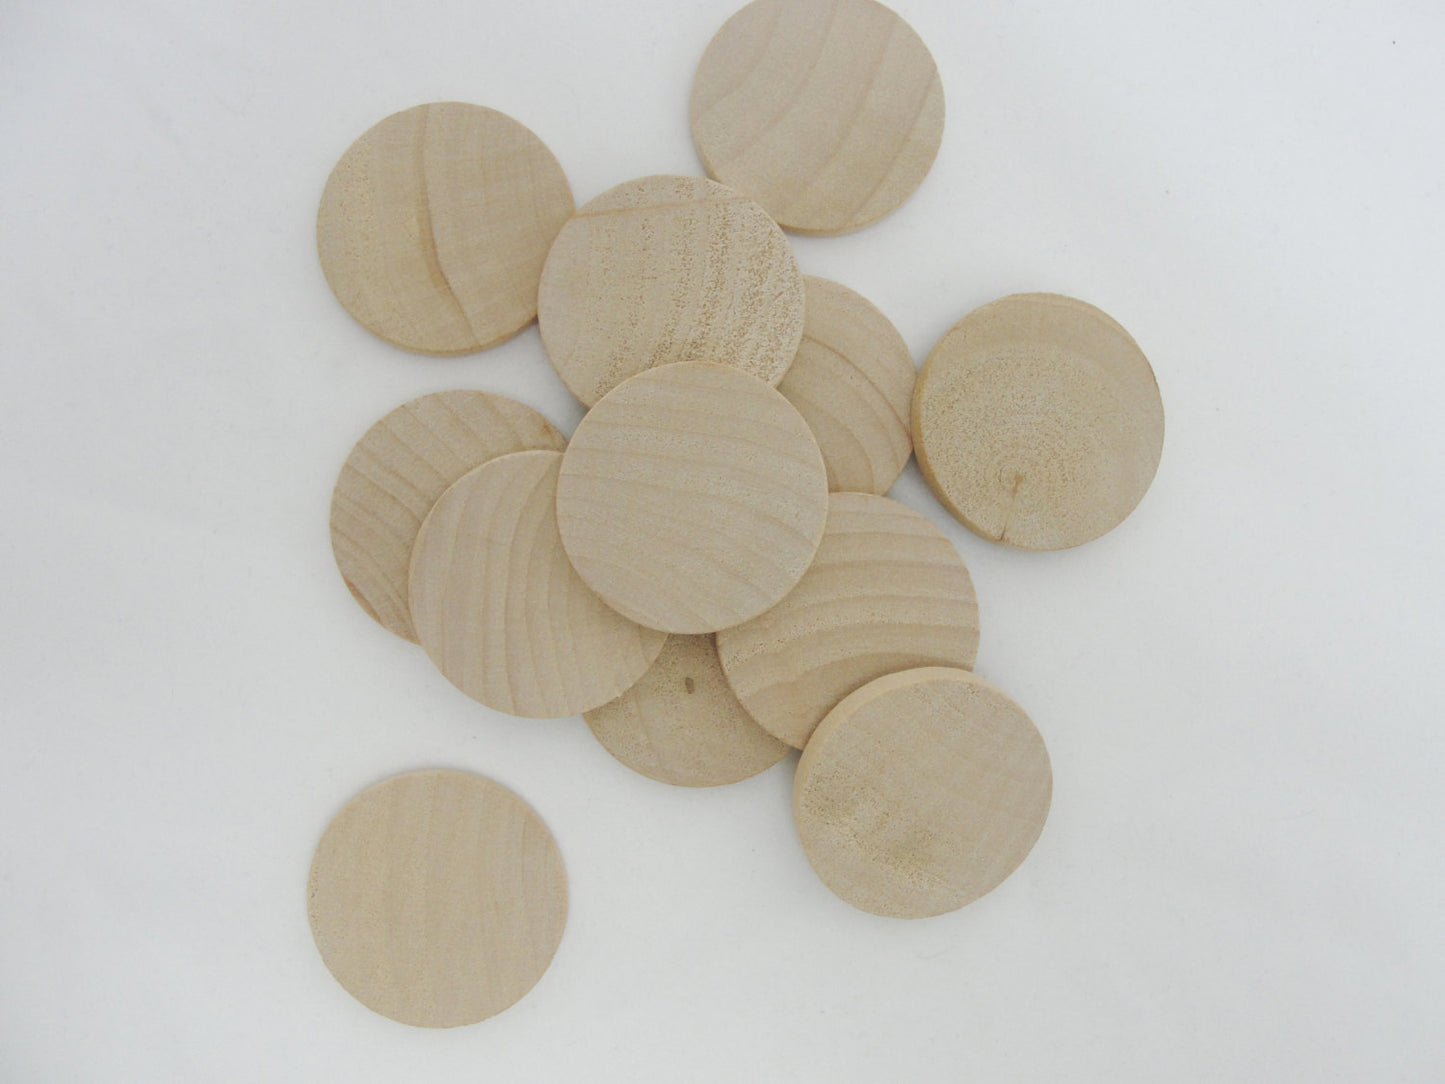 Wooden Circles discs .75 (3/4) x 1/8 thick